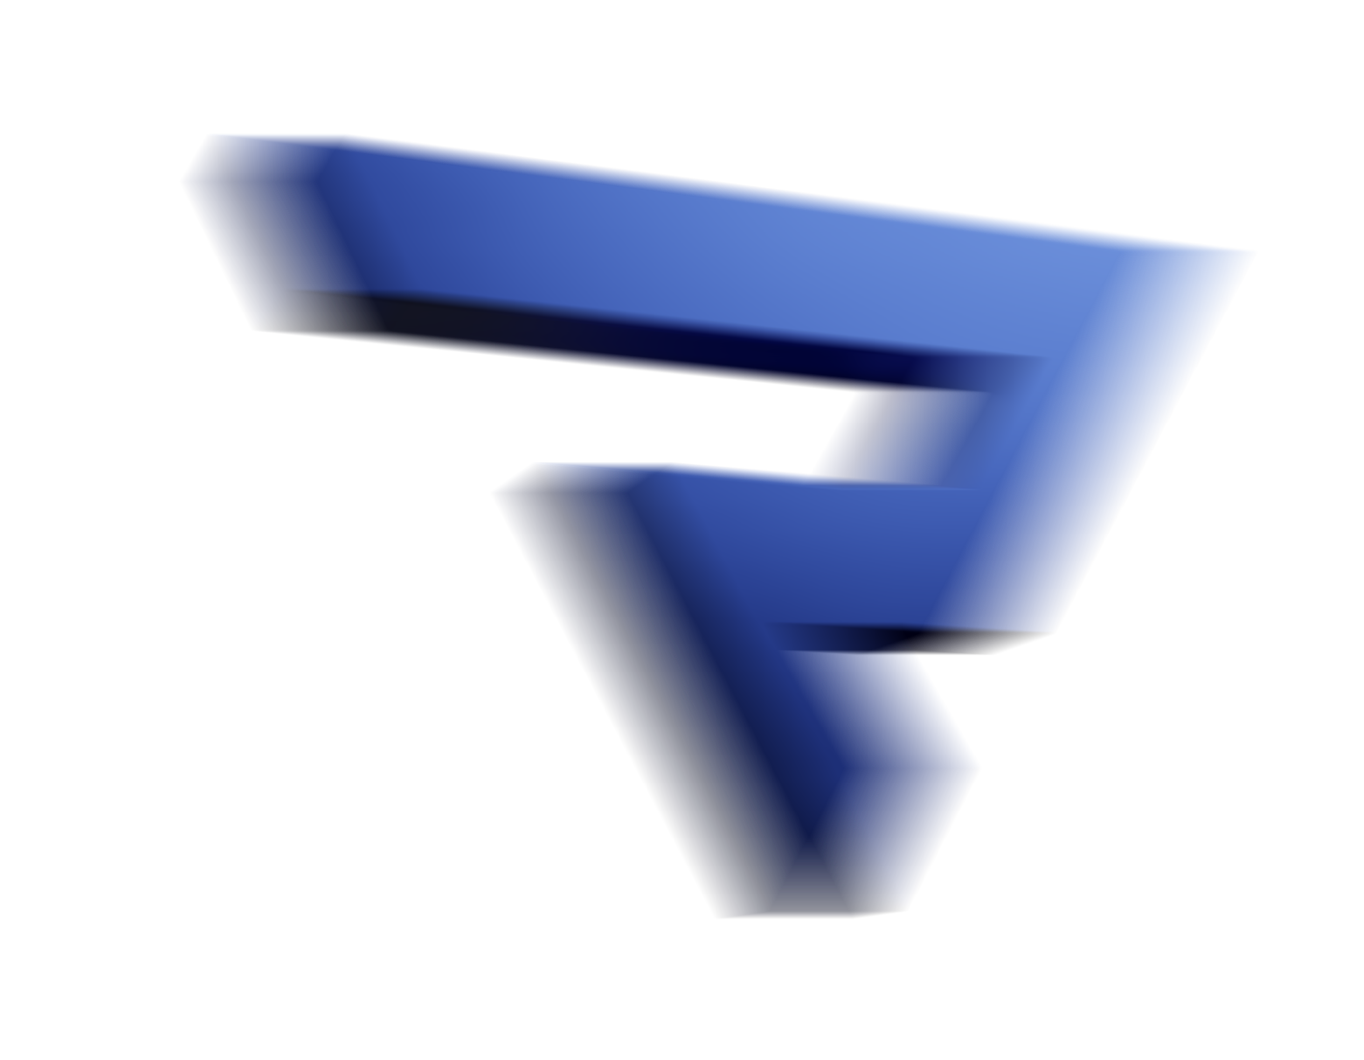 motion blur logo of remeno systems